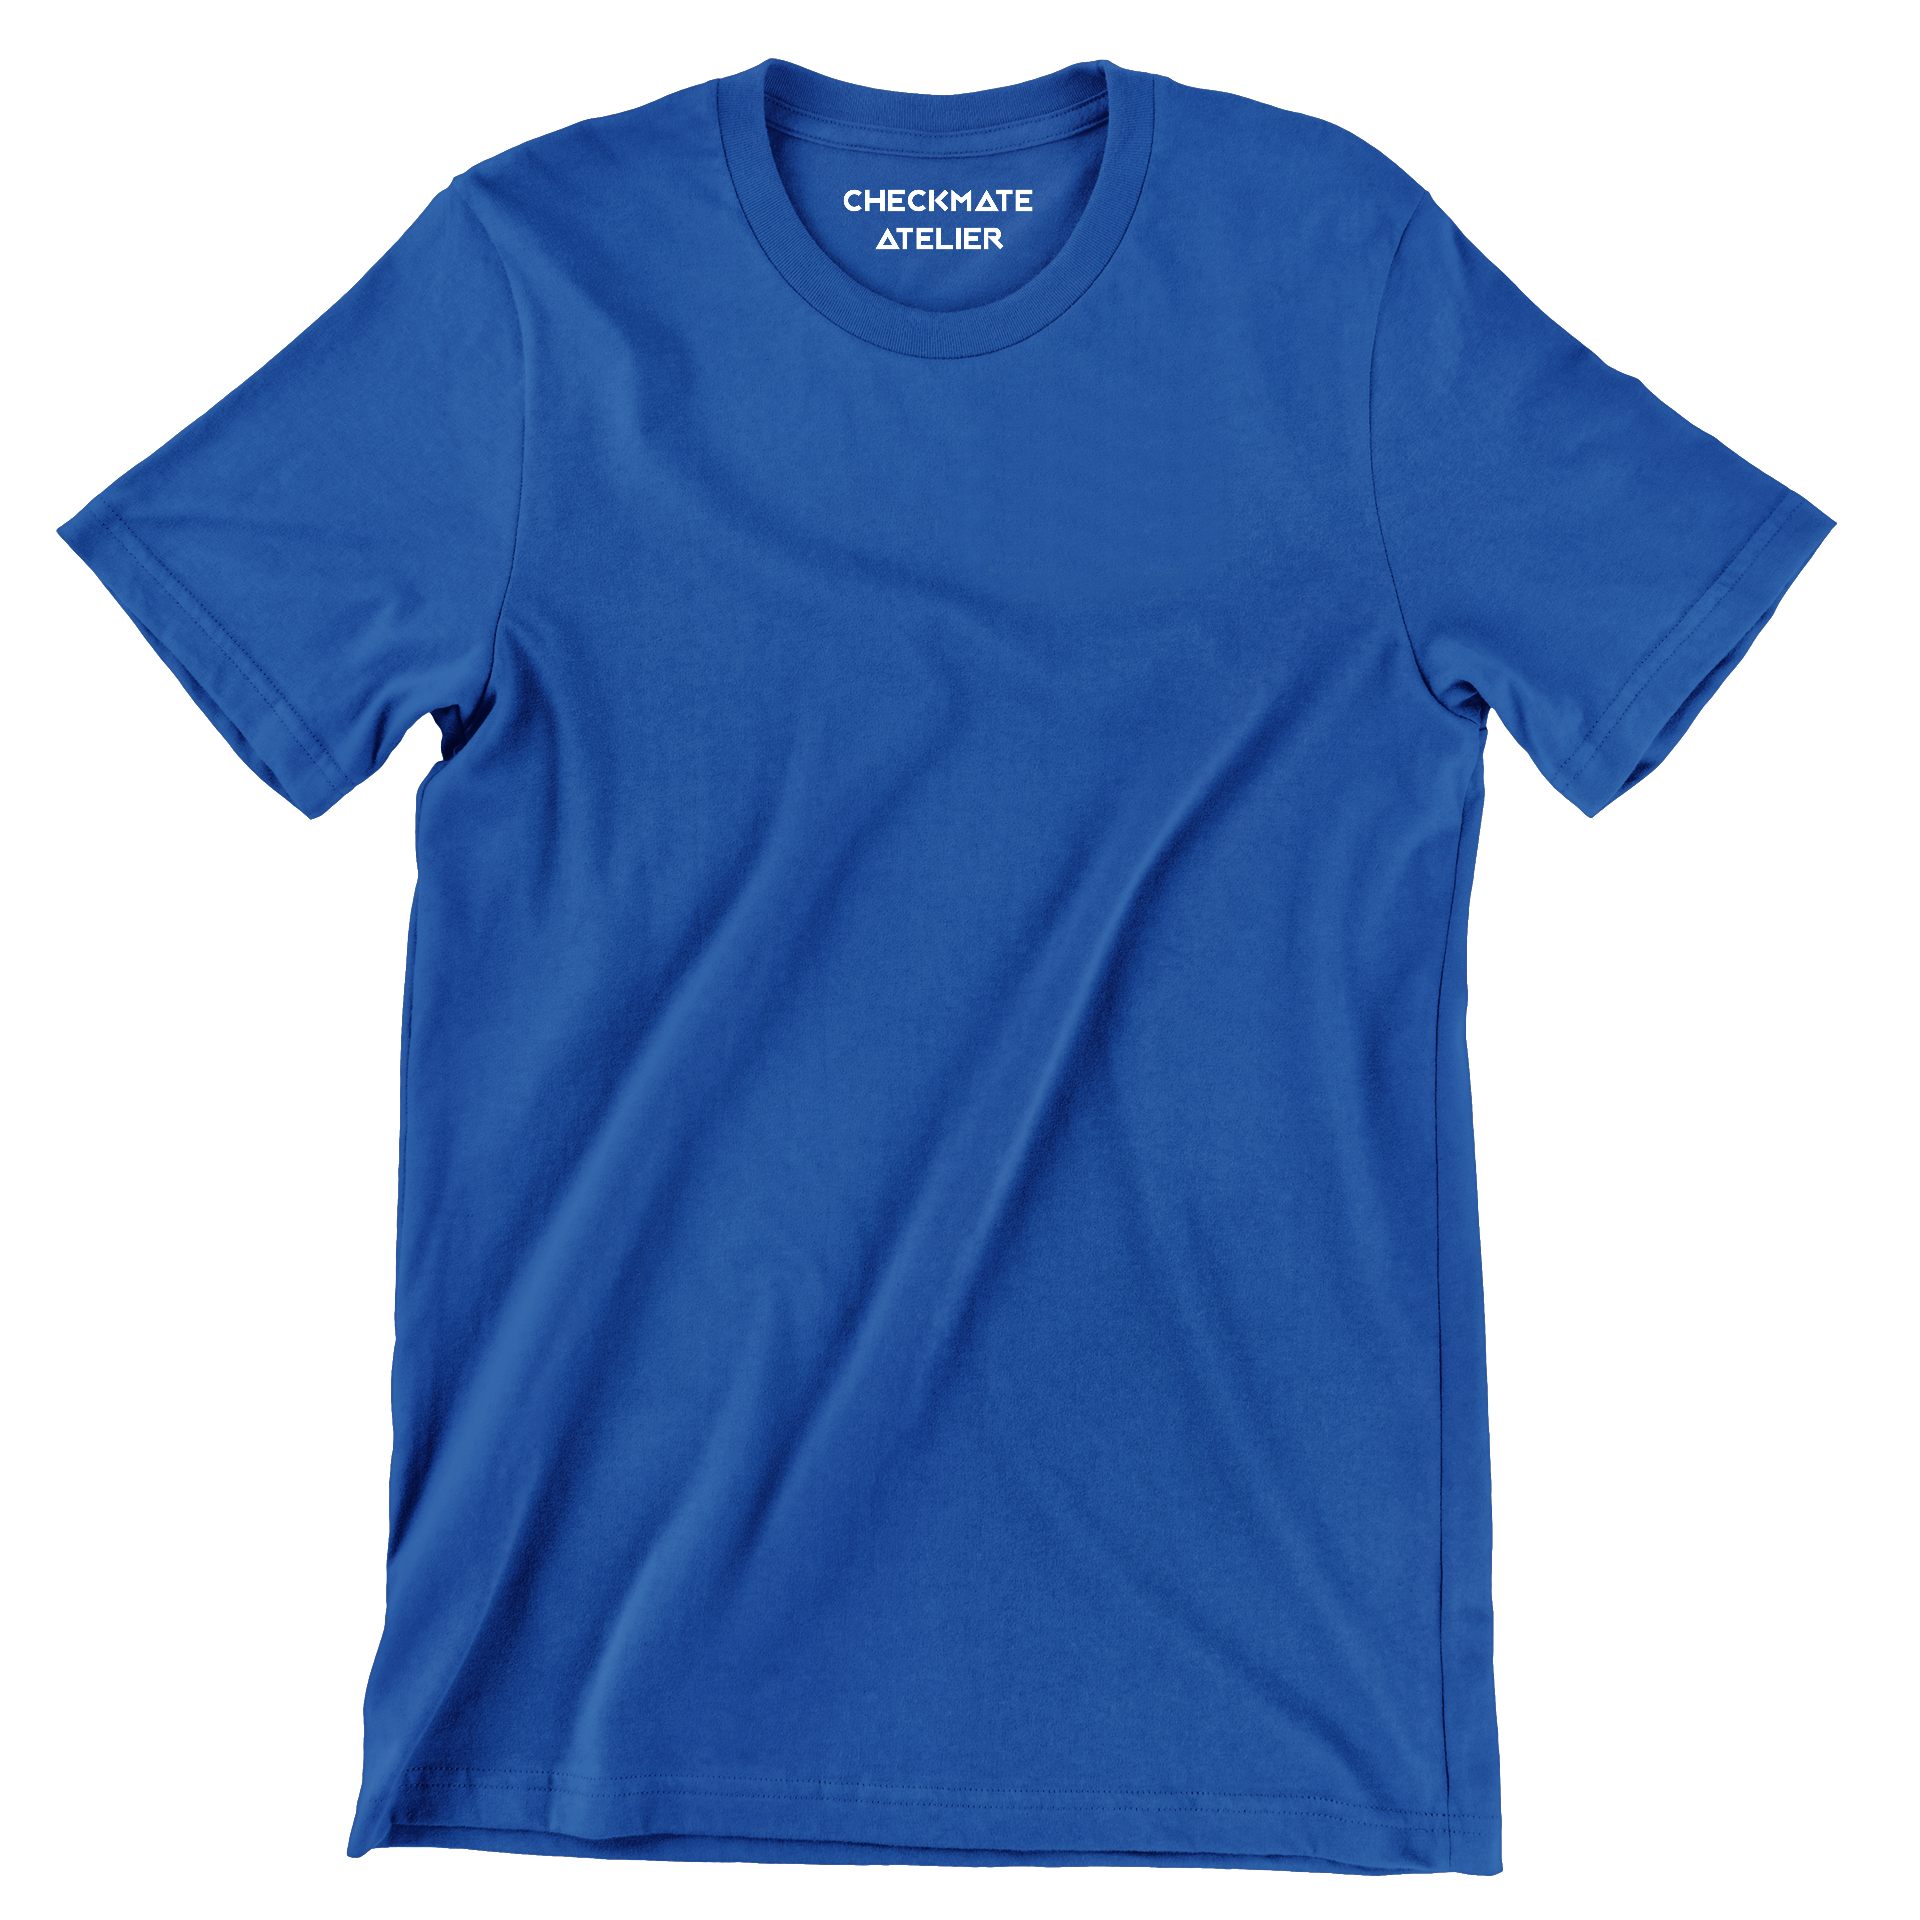 Royal Blue Basic T-Shirt - Shop Now - Checkmate Atelier